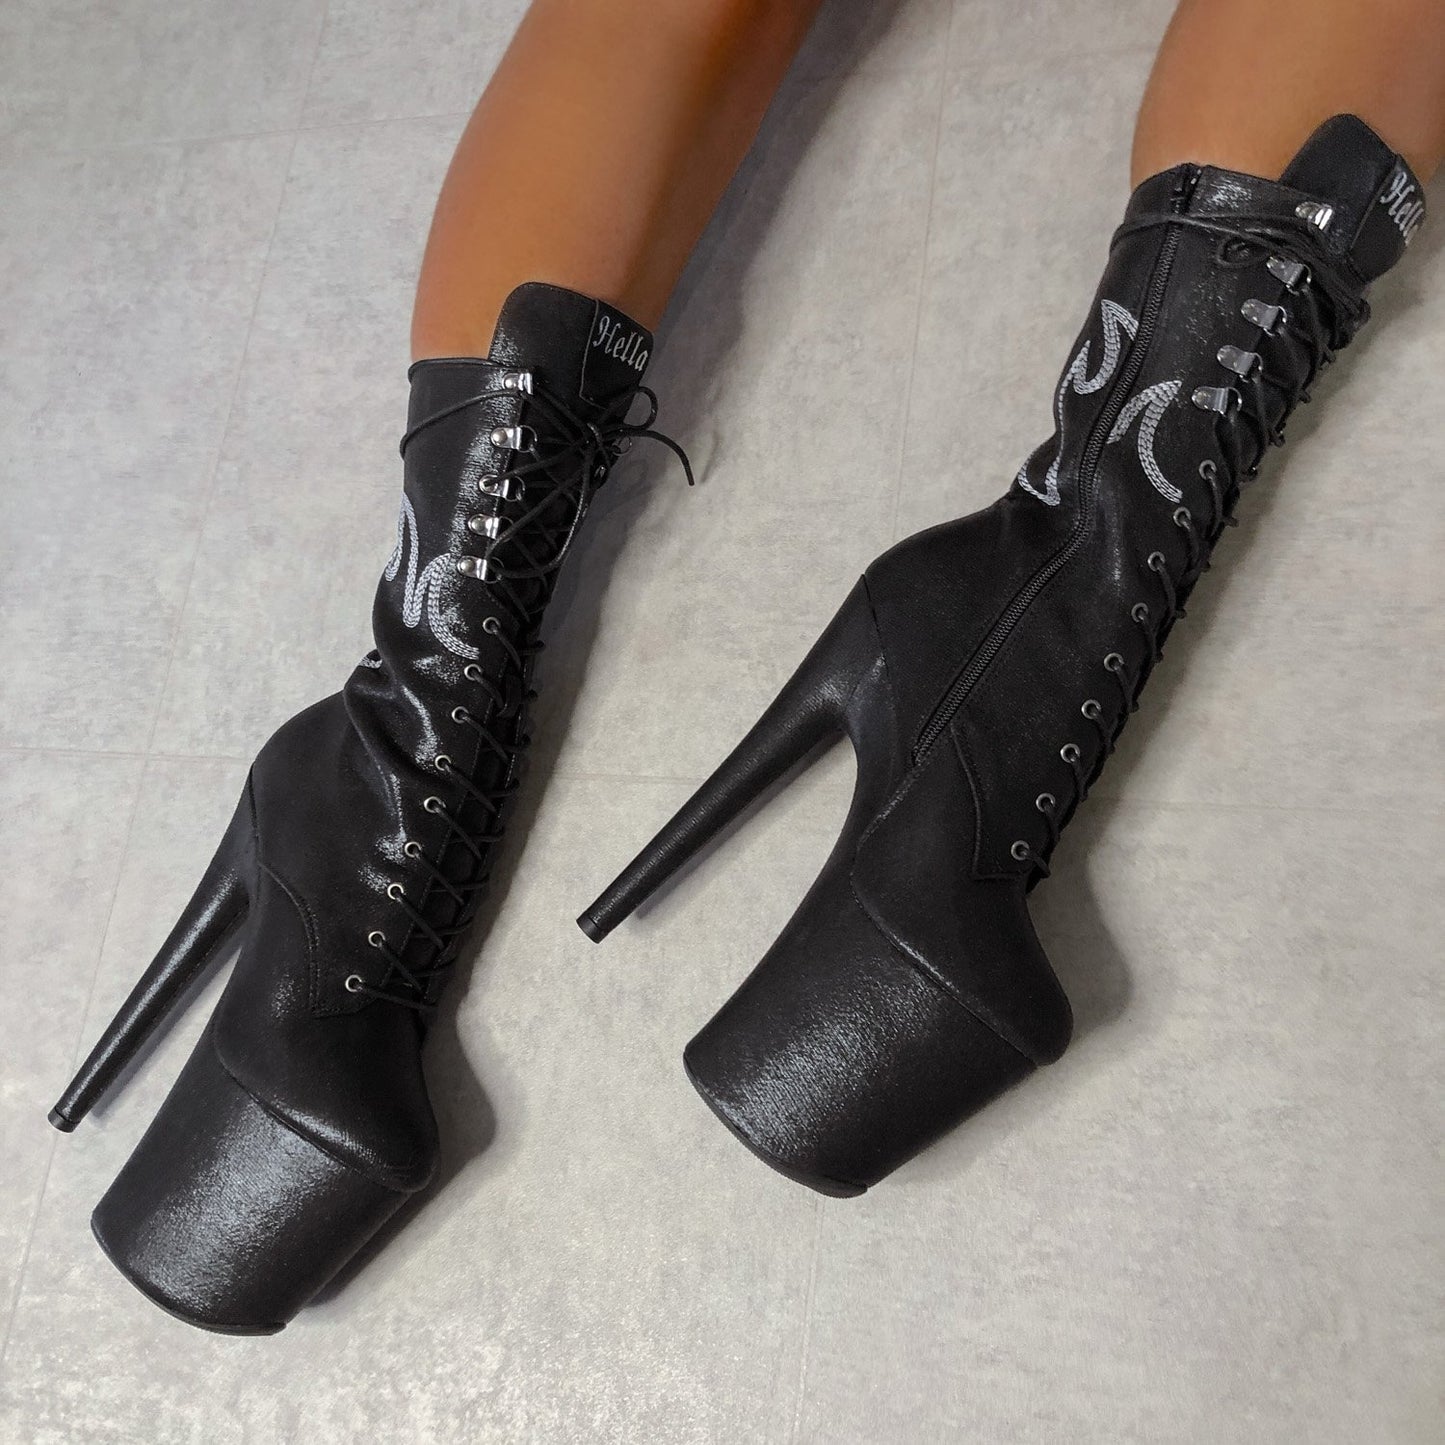 HellGirl Black/Glow Front Lace - 8 INCH, stripper shoe, stripper heel, pole heel, not a pleaser, platform, dancer, pole dance, floor work